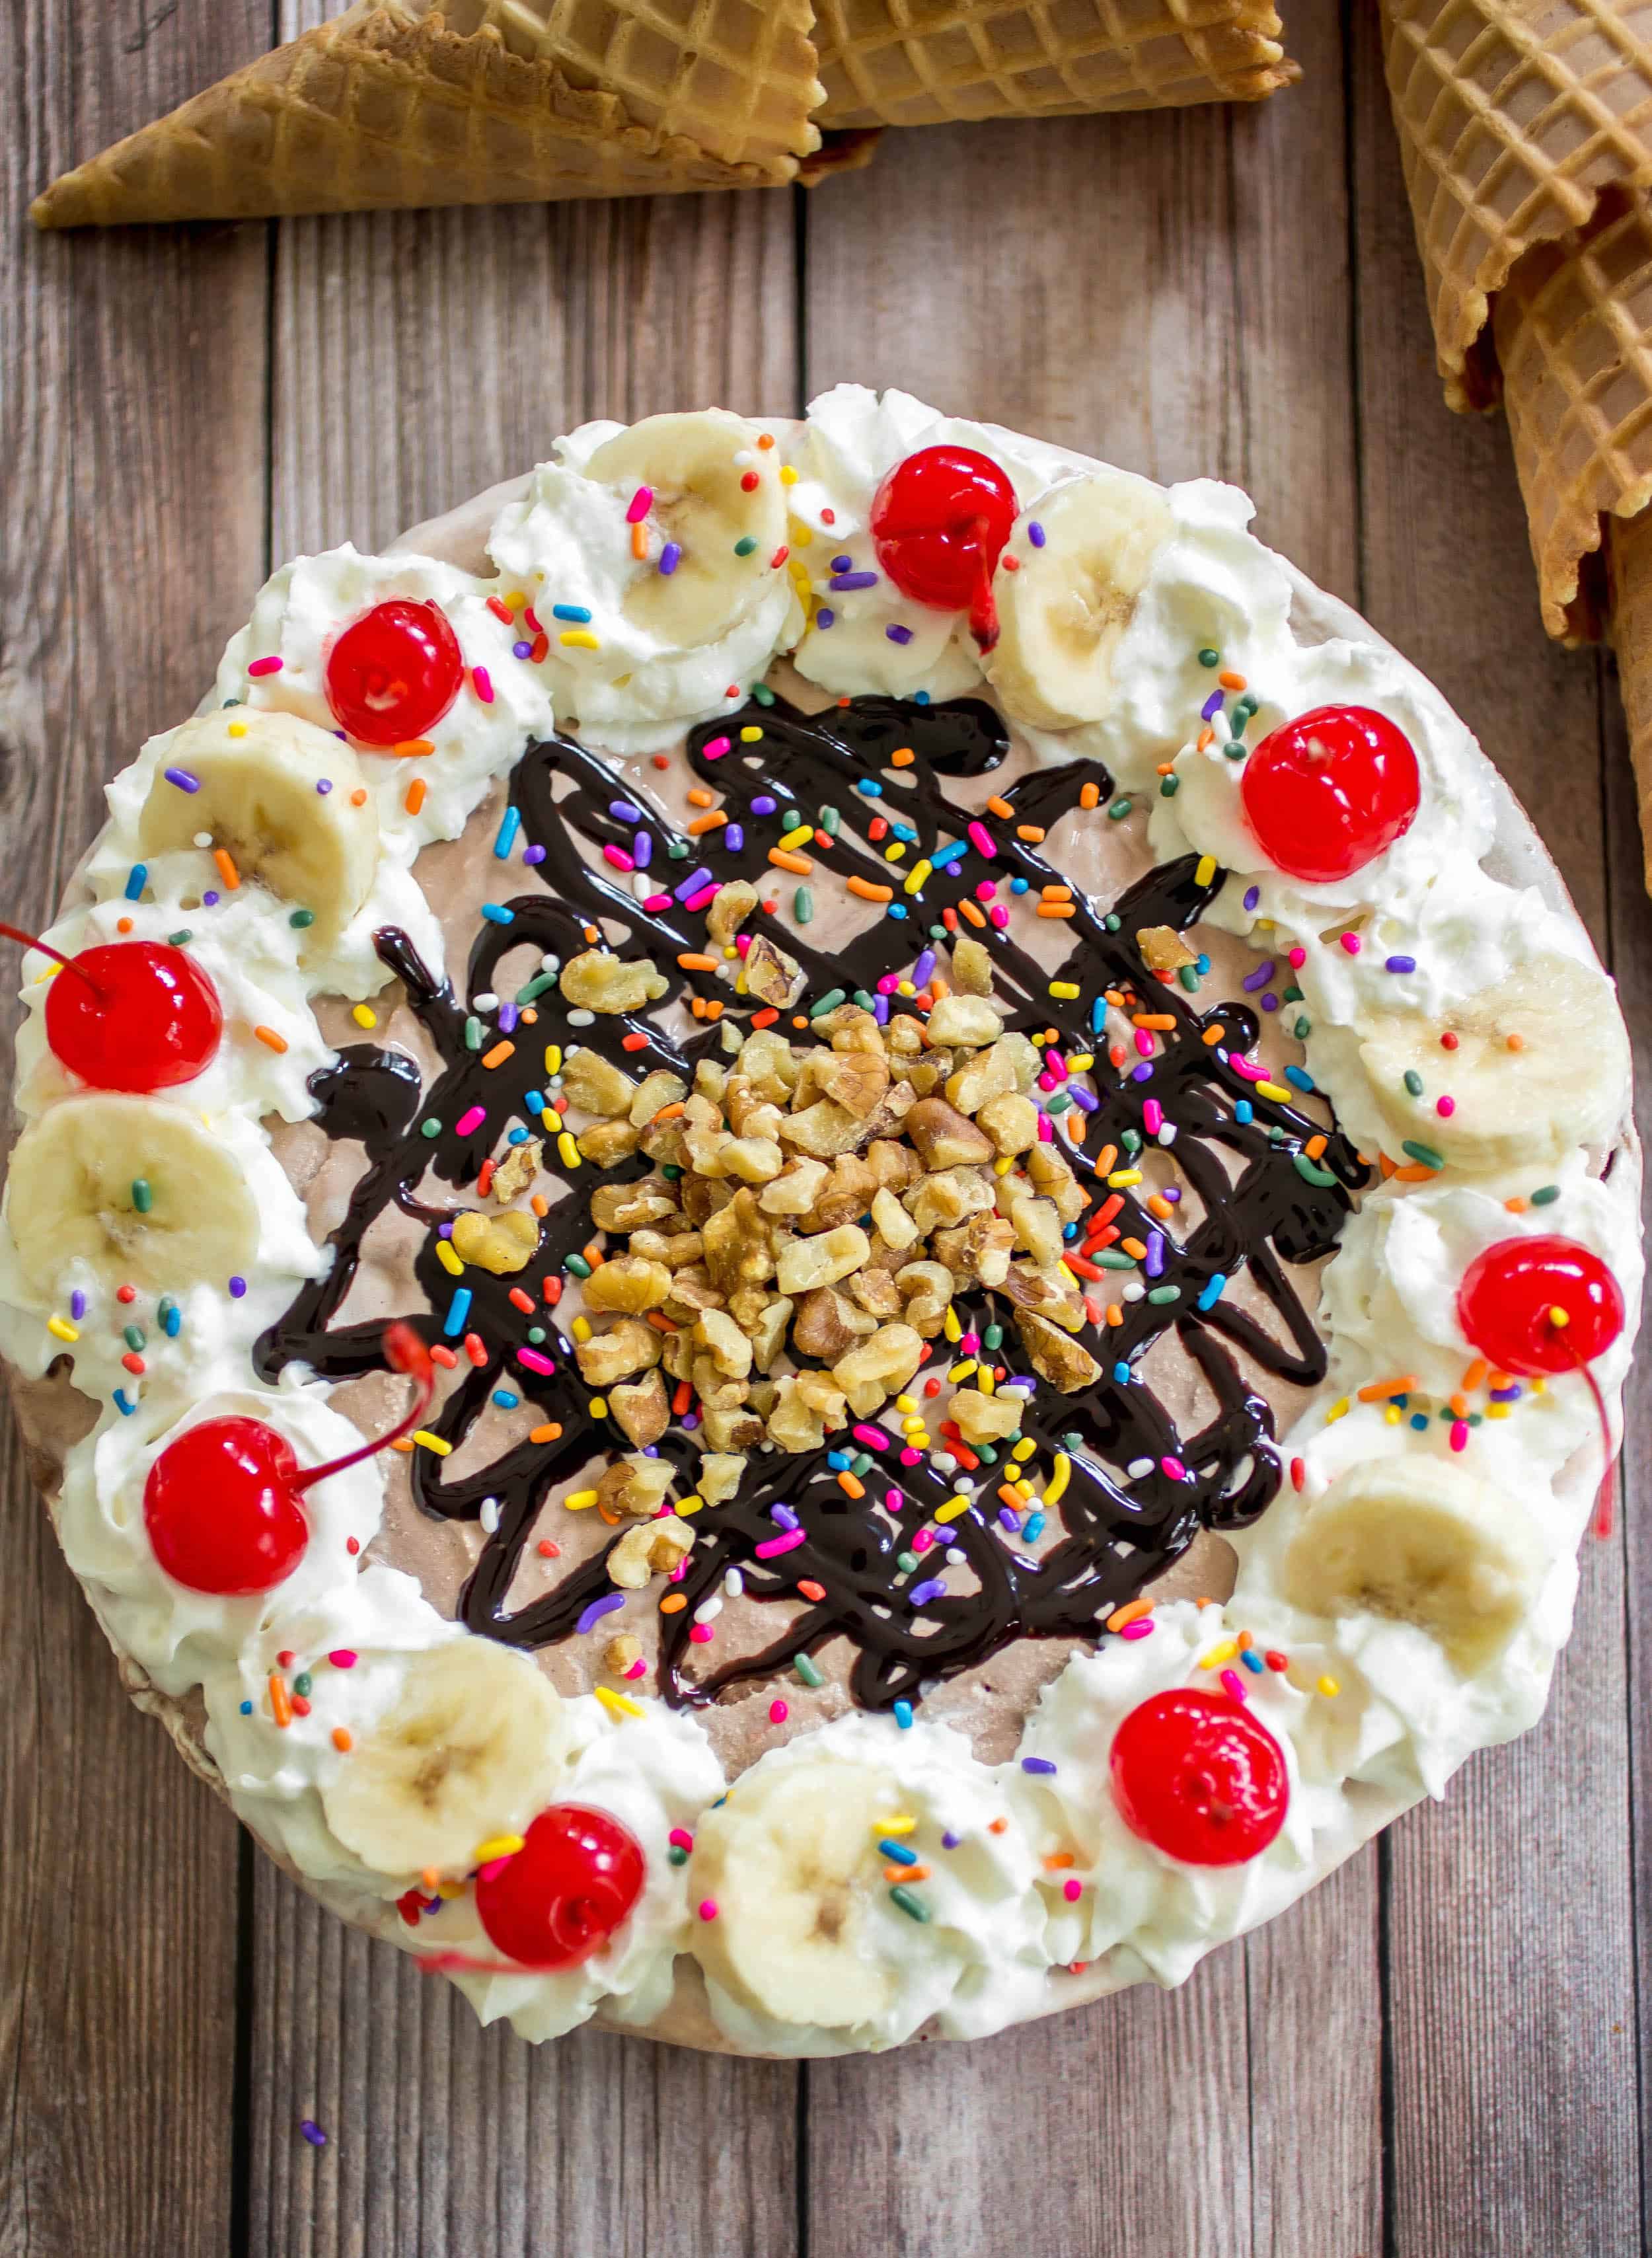  No-Bake Banana Split Ice Cream Pie - An easy and crazy delicious banana split alternative that everyone can share!